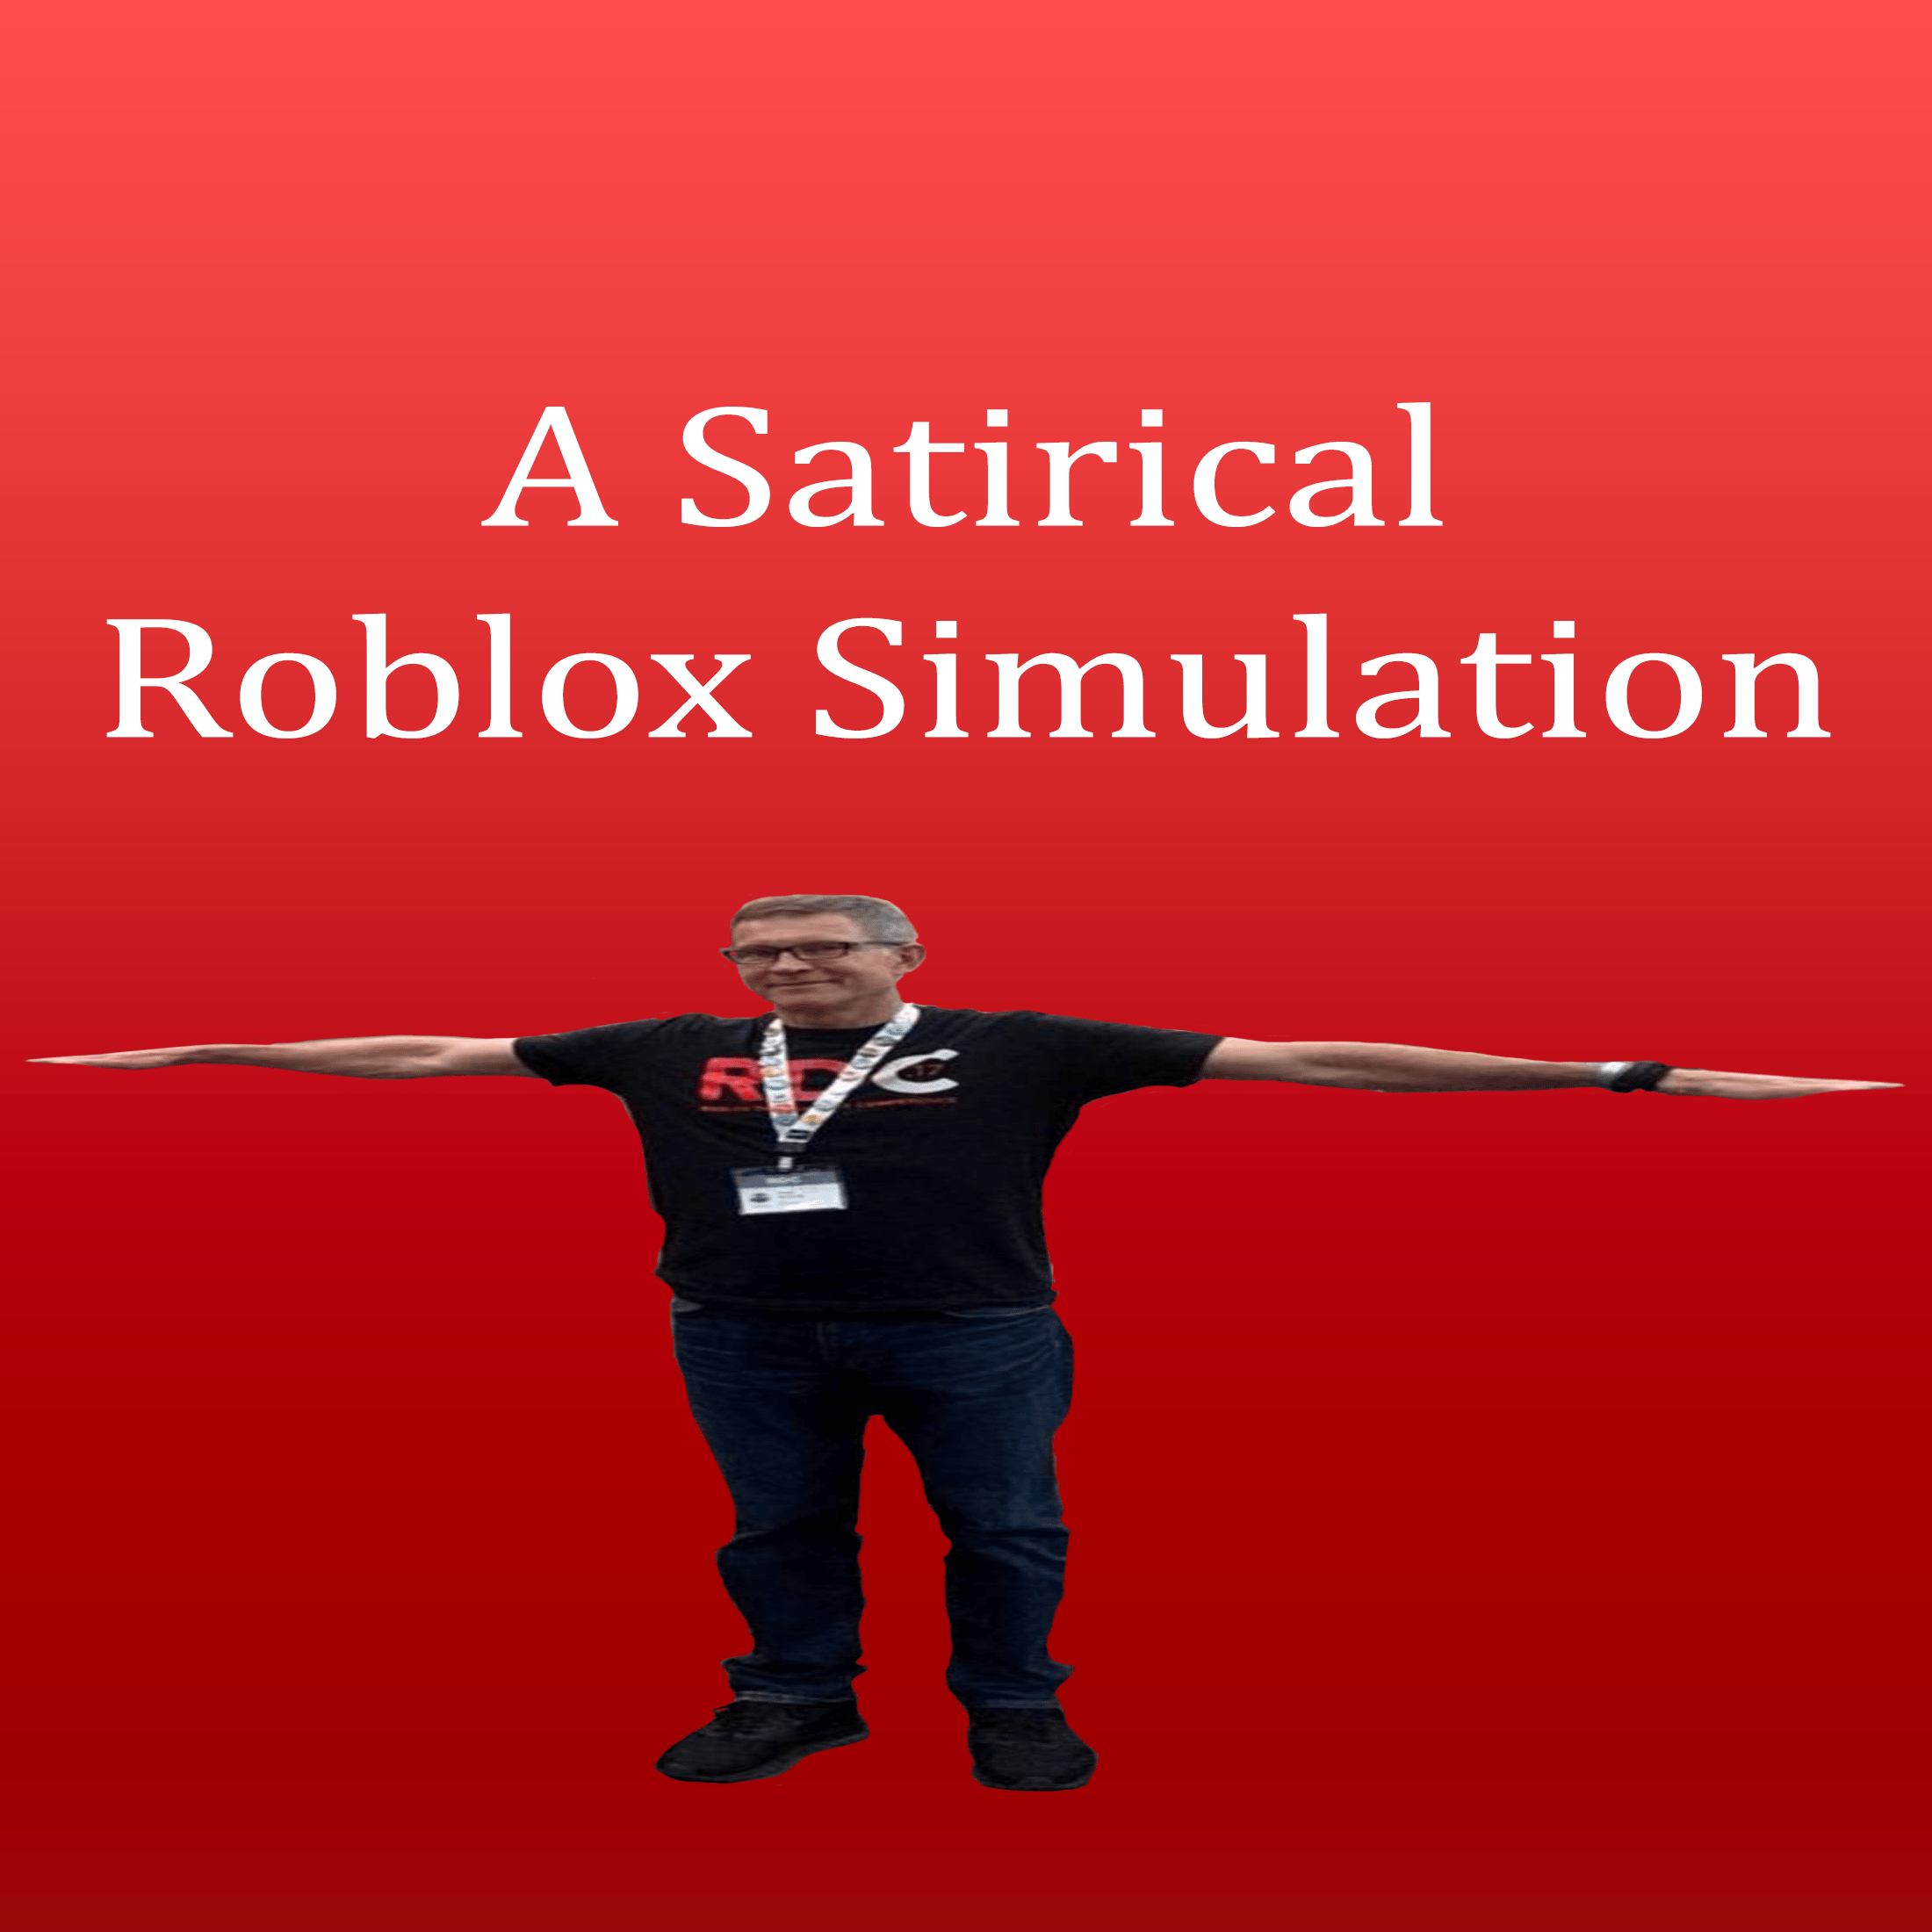 A Satirical Roblox Simulation